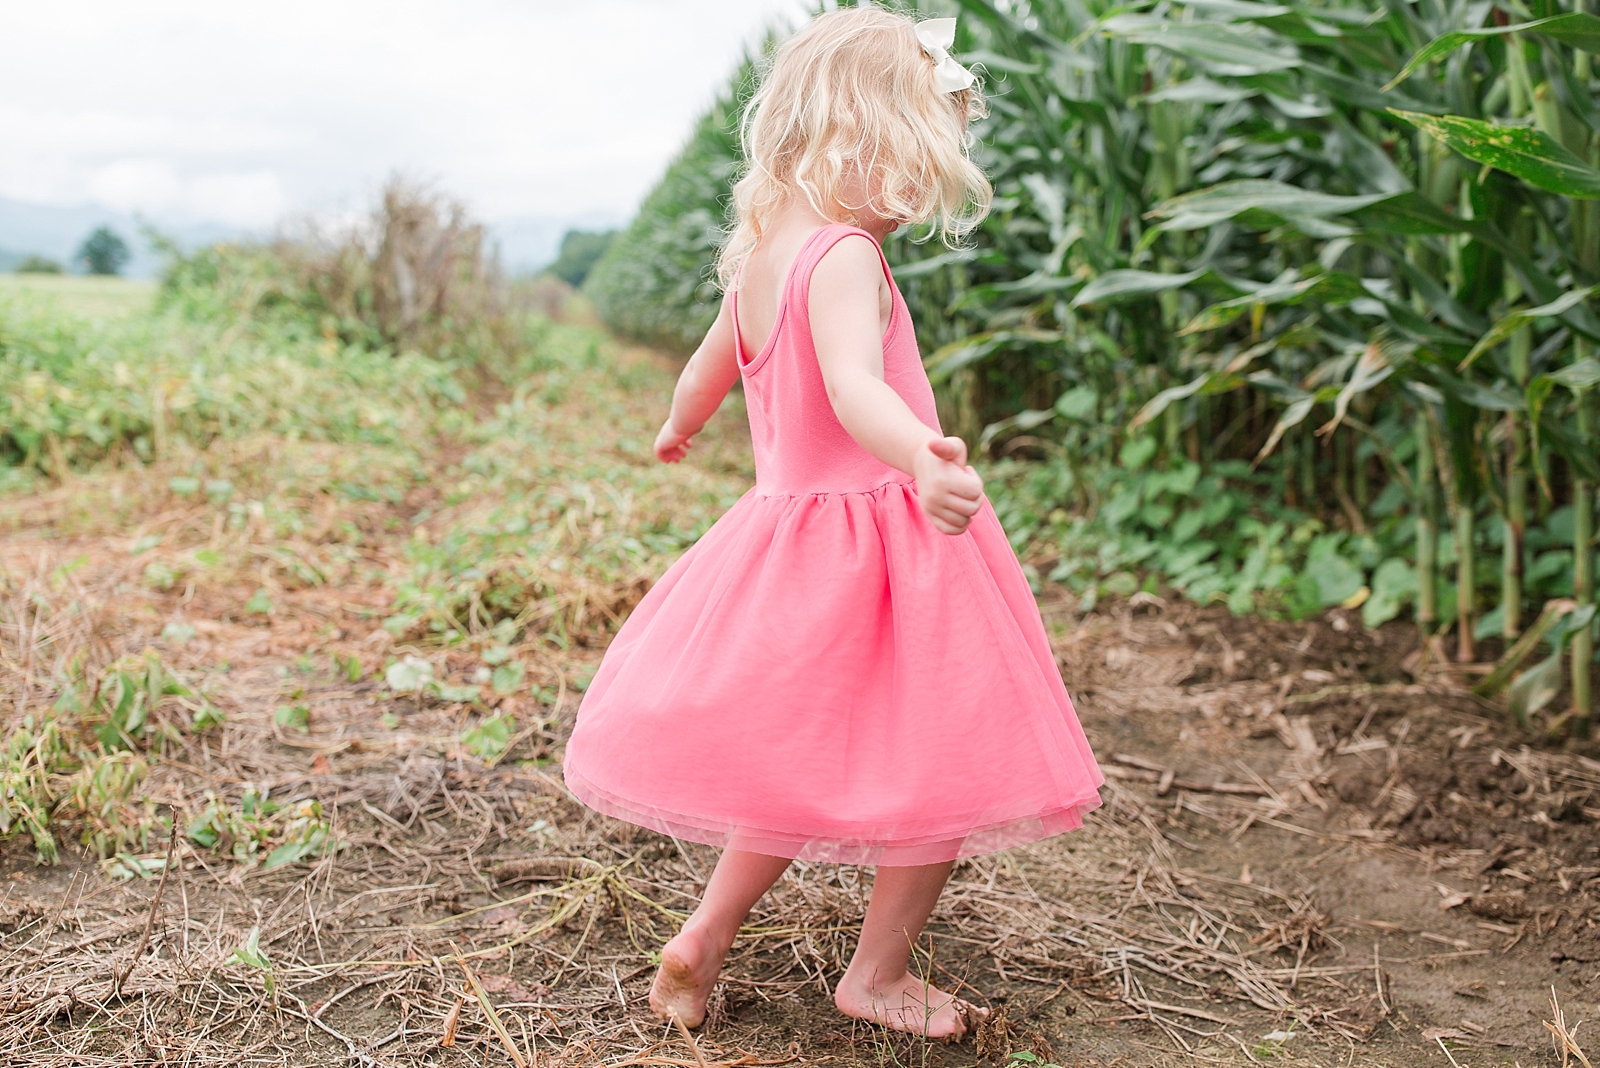 Little girl twirling in a cornfield barefoot photo